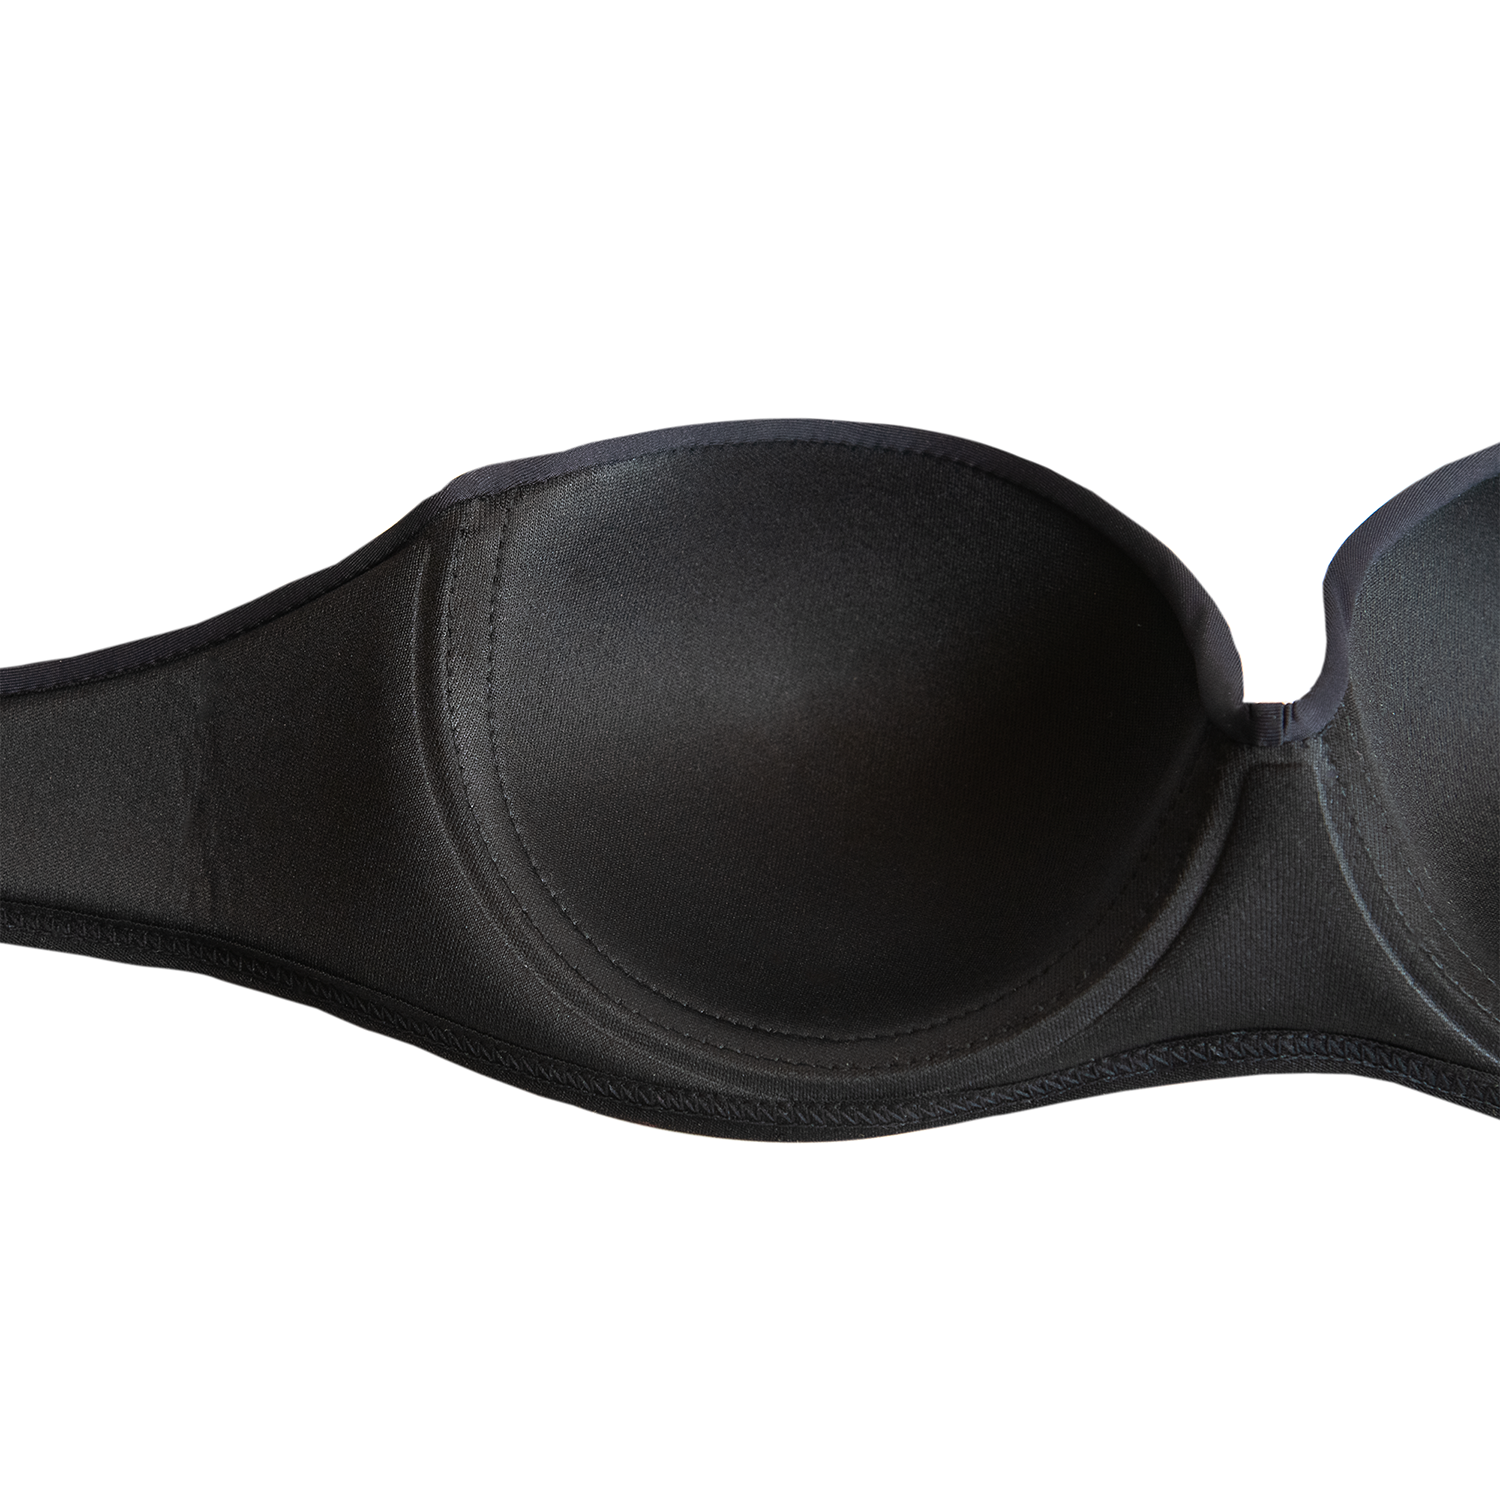 Black Strapless Bra Set with Side Hook – NALINGE公式オンラインストア・ランジェリー専門店